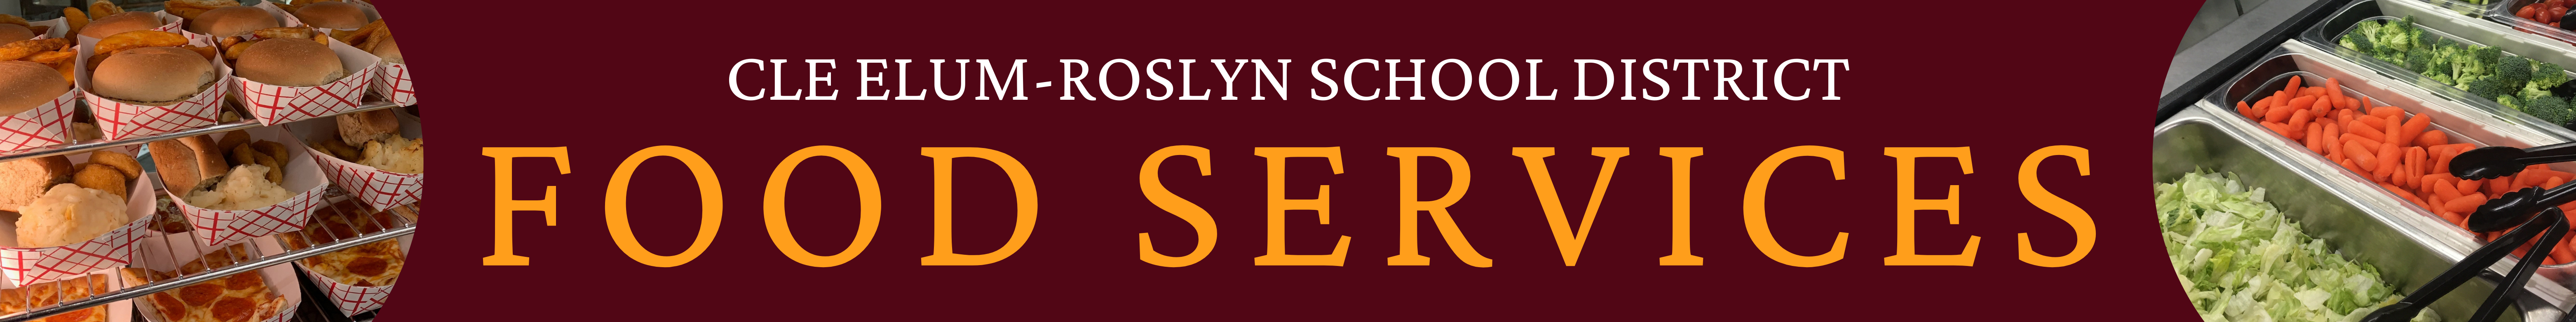 Cle Elum-Roslyn School District Food Services